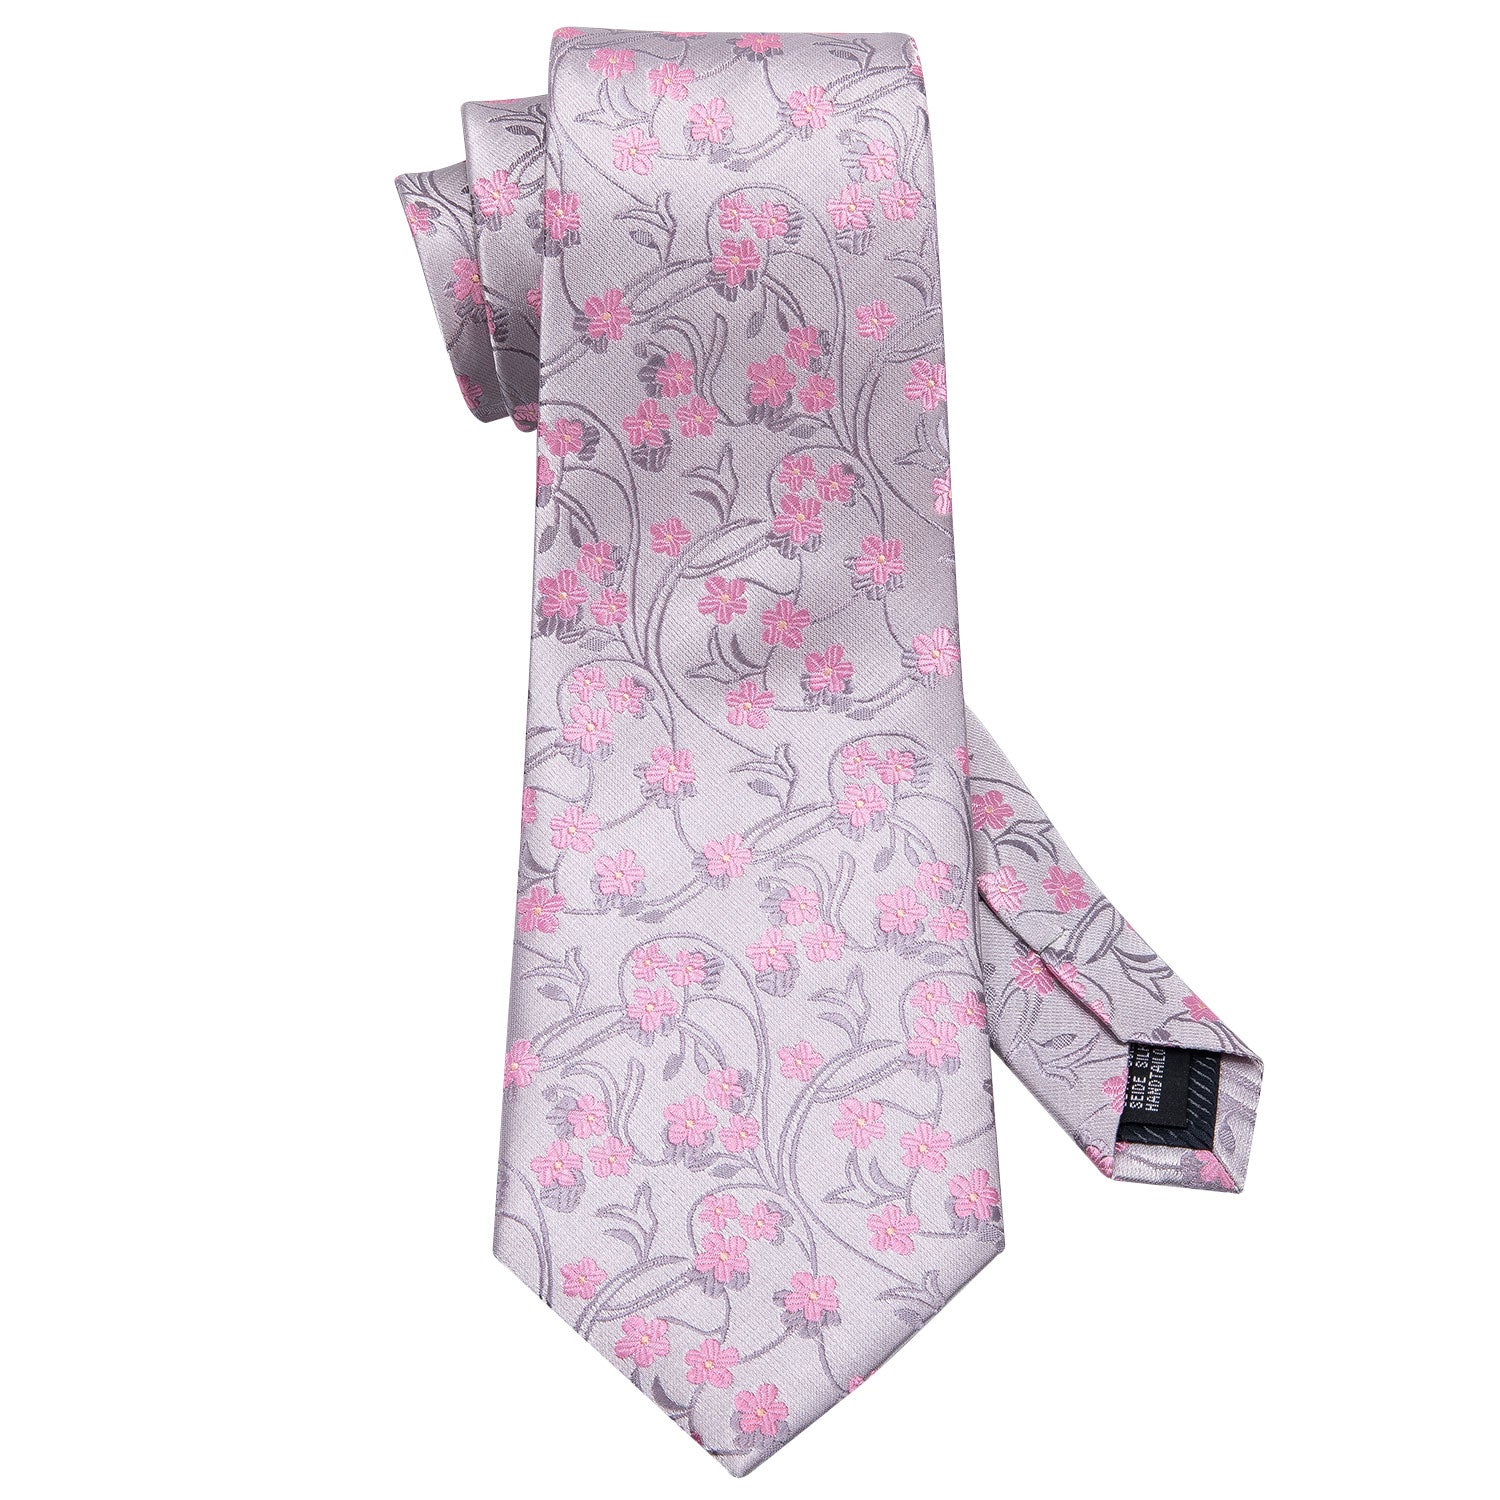 Silver Pink Floral Tie Pocket Square Cufflinks Set